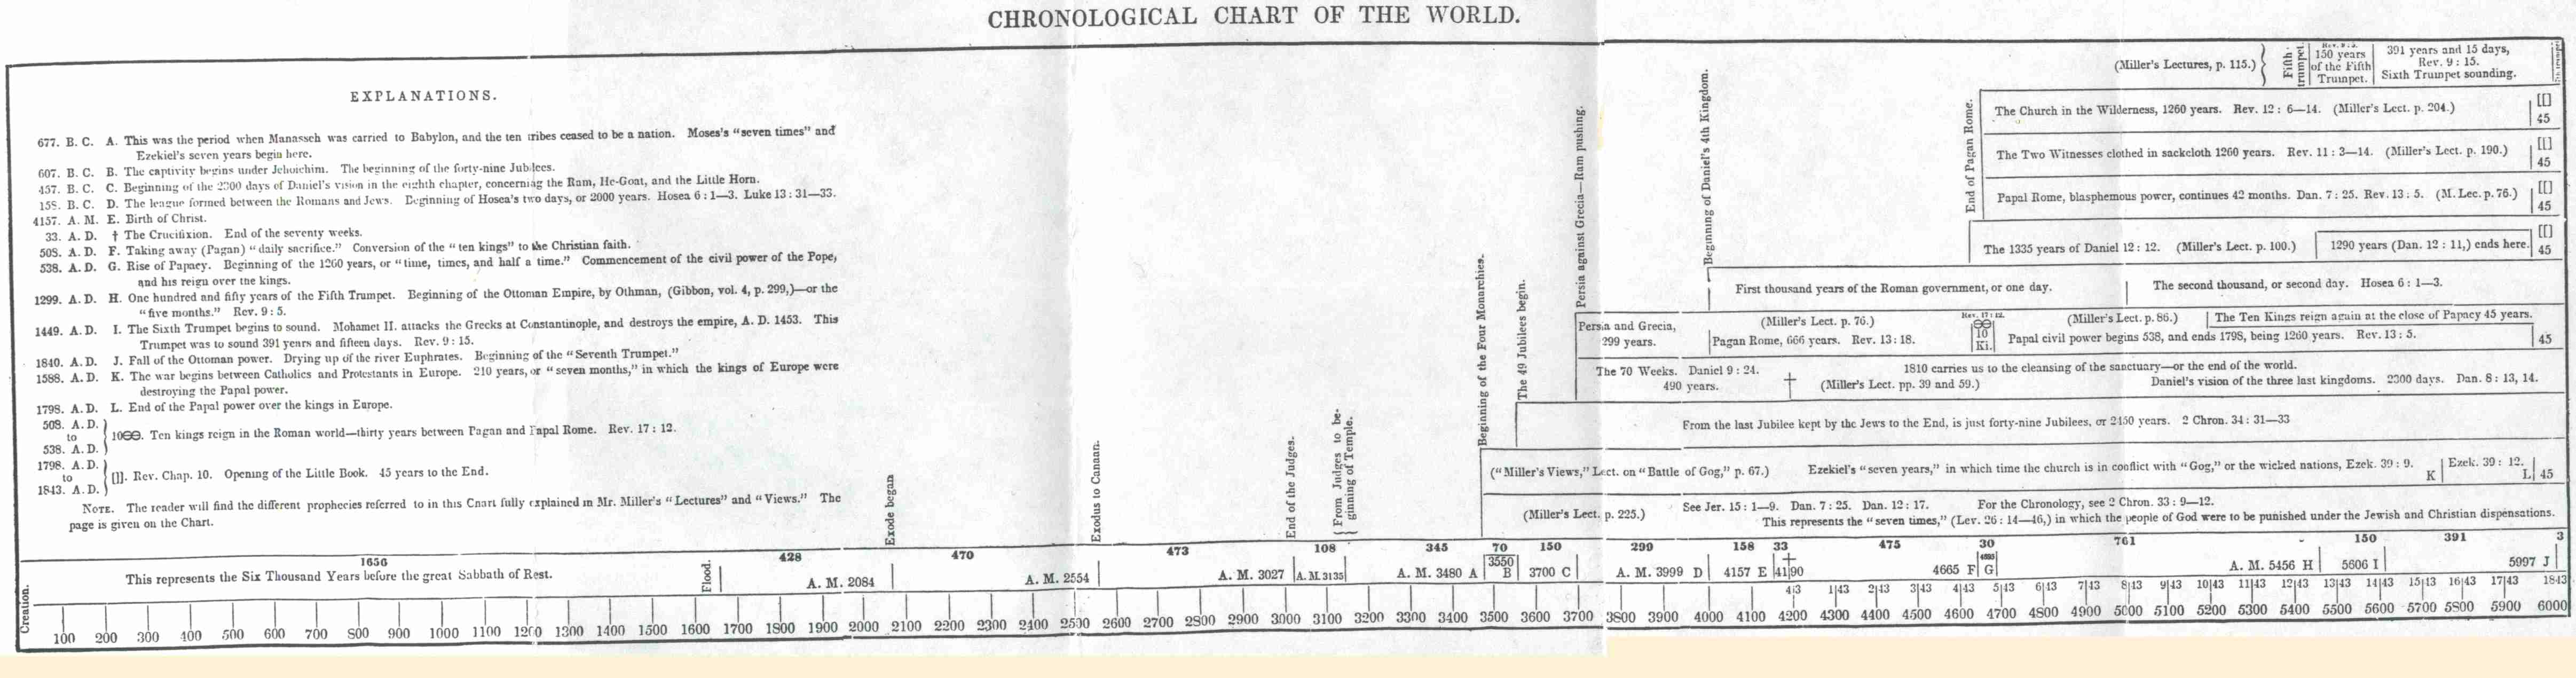 Chronological Chart